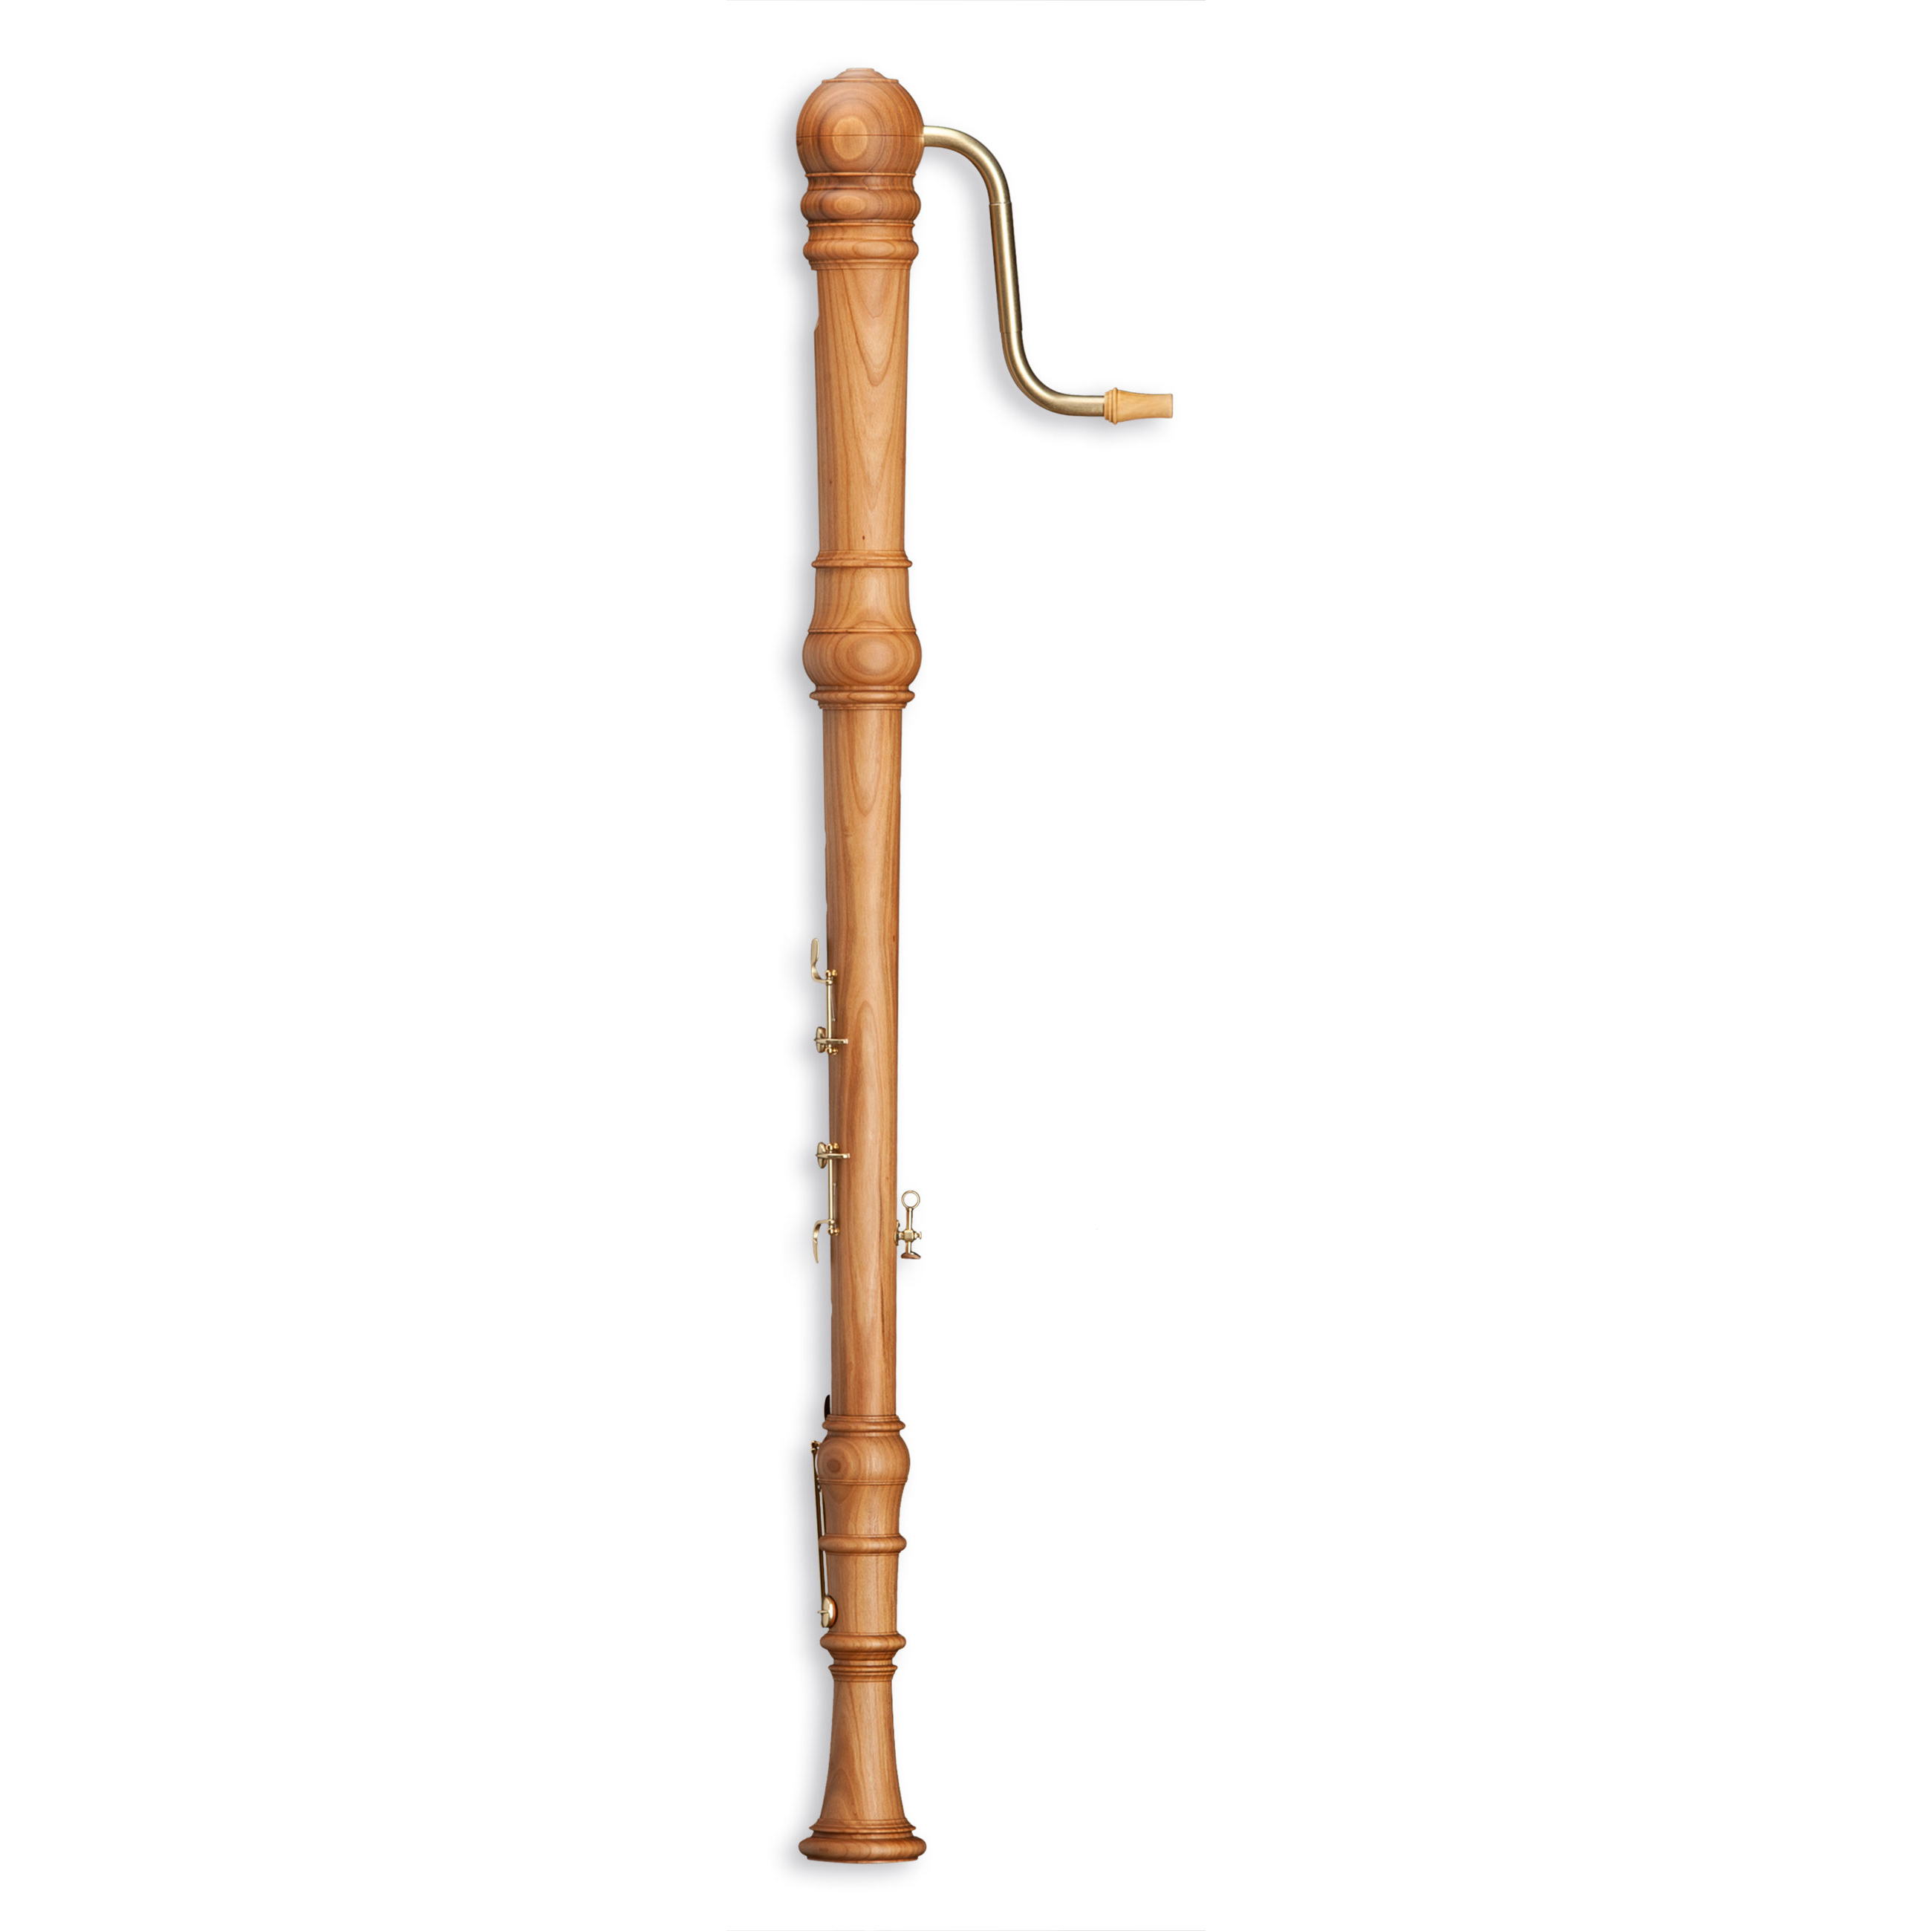 Bass recorder Mollenhauer 5501 Denner baroque with four keys